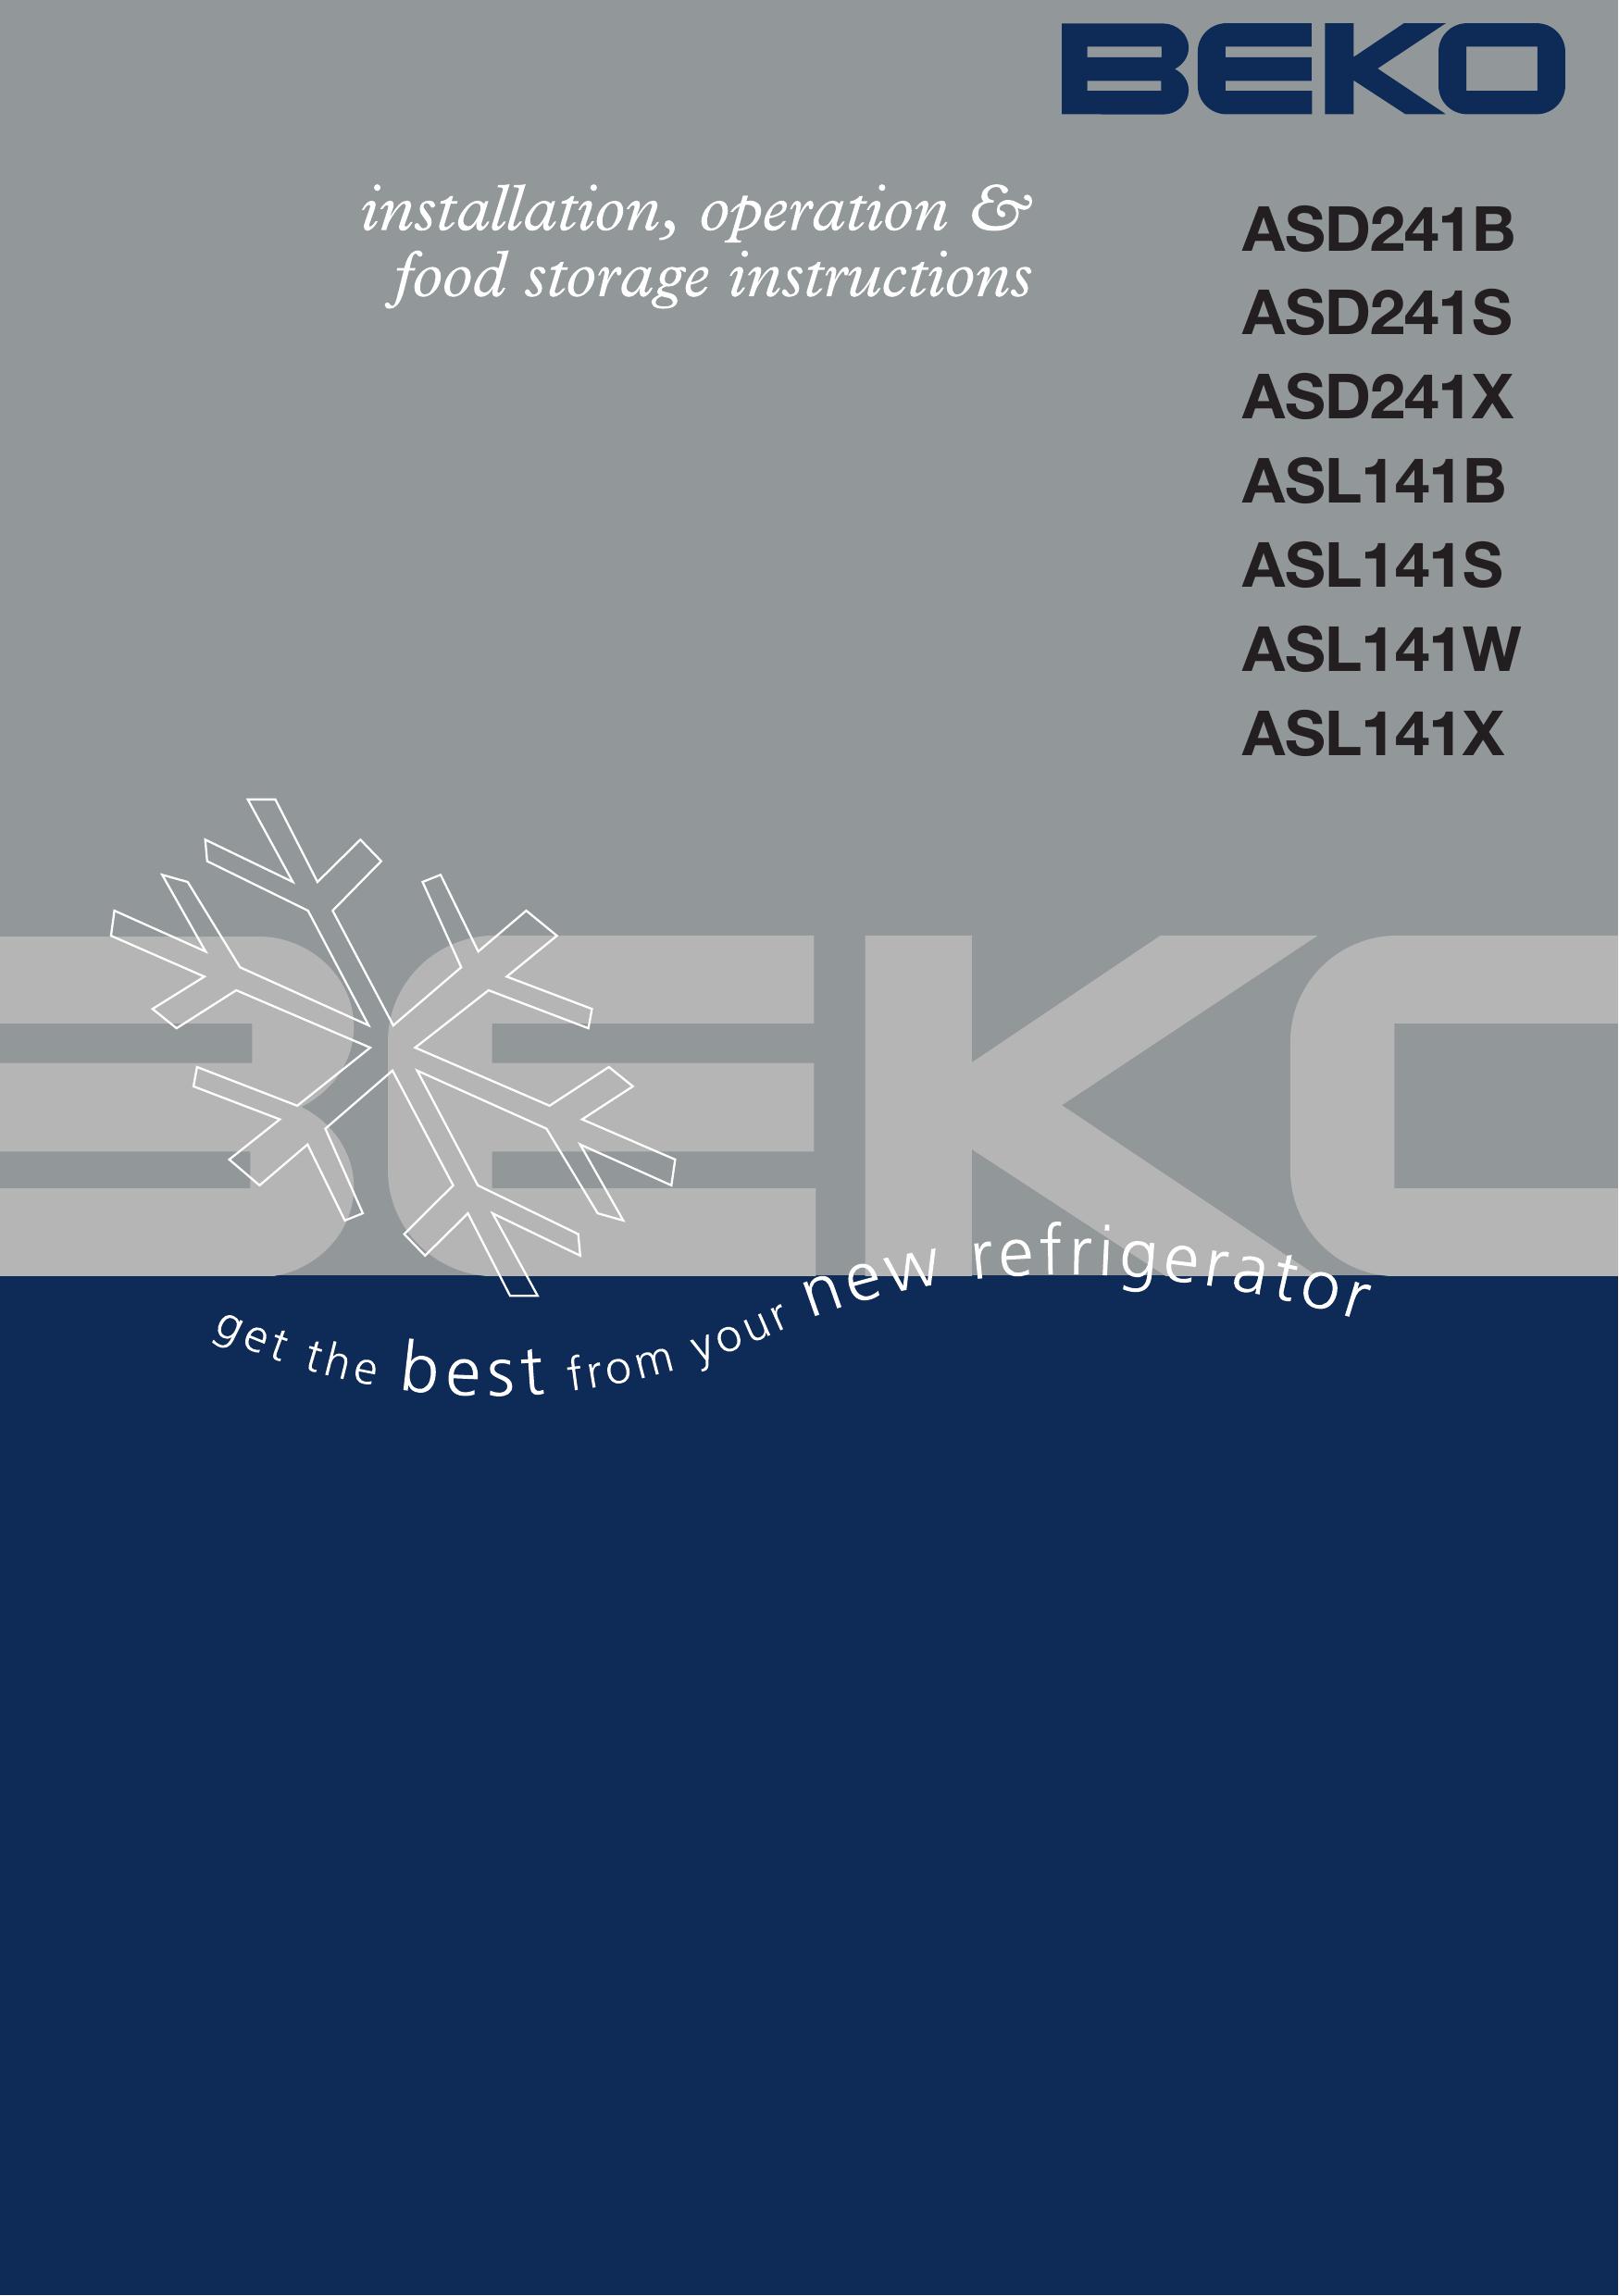 Beko ASD241B Refrigerator User Manual